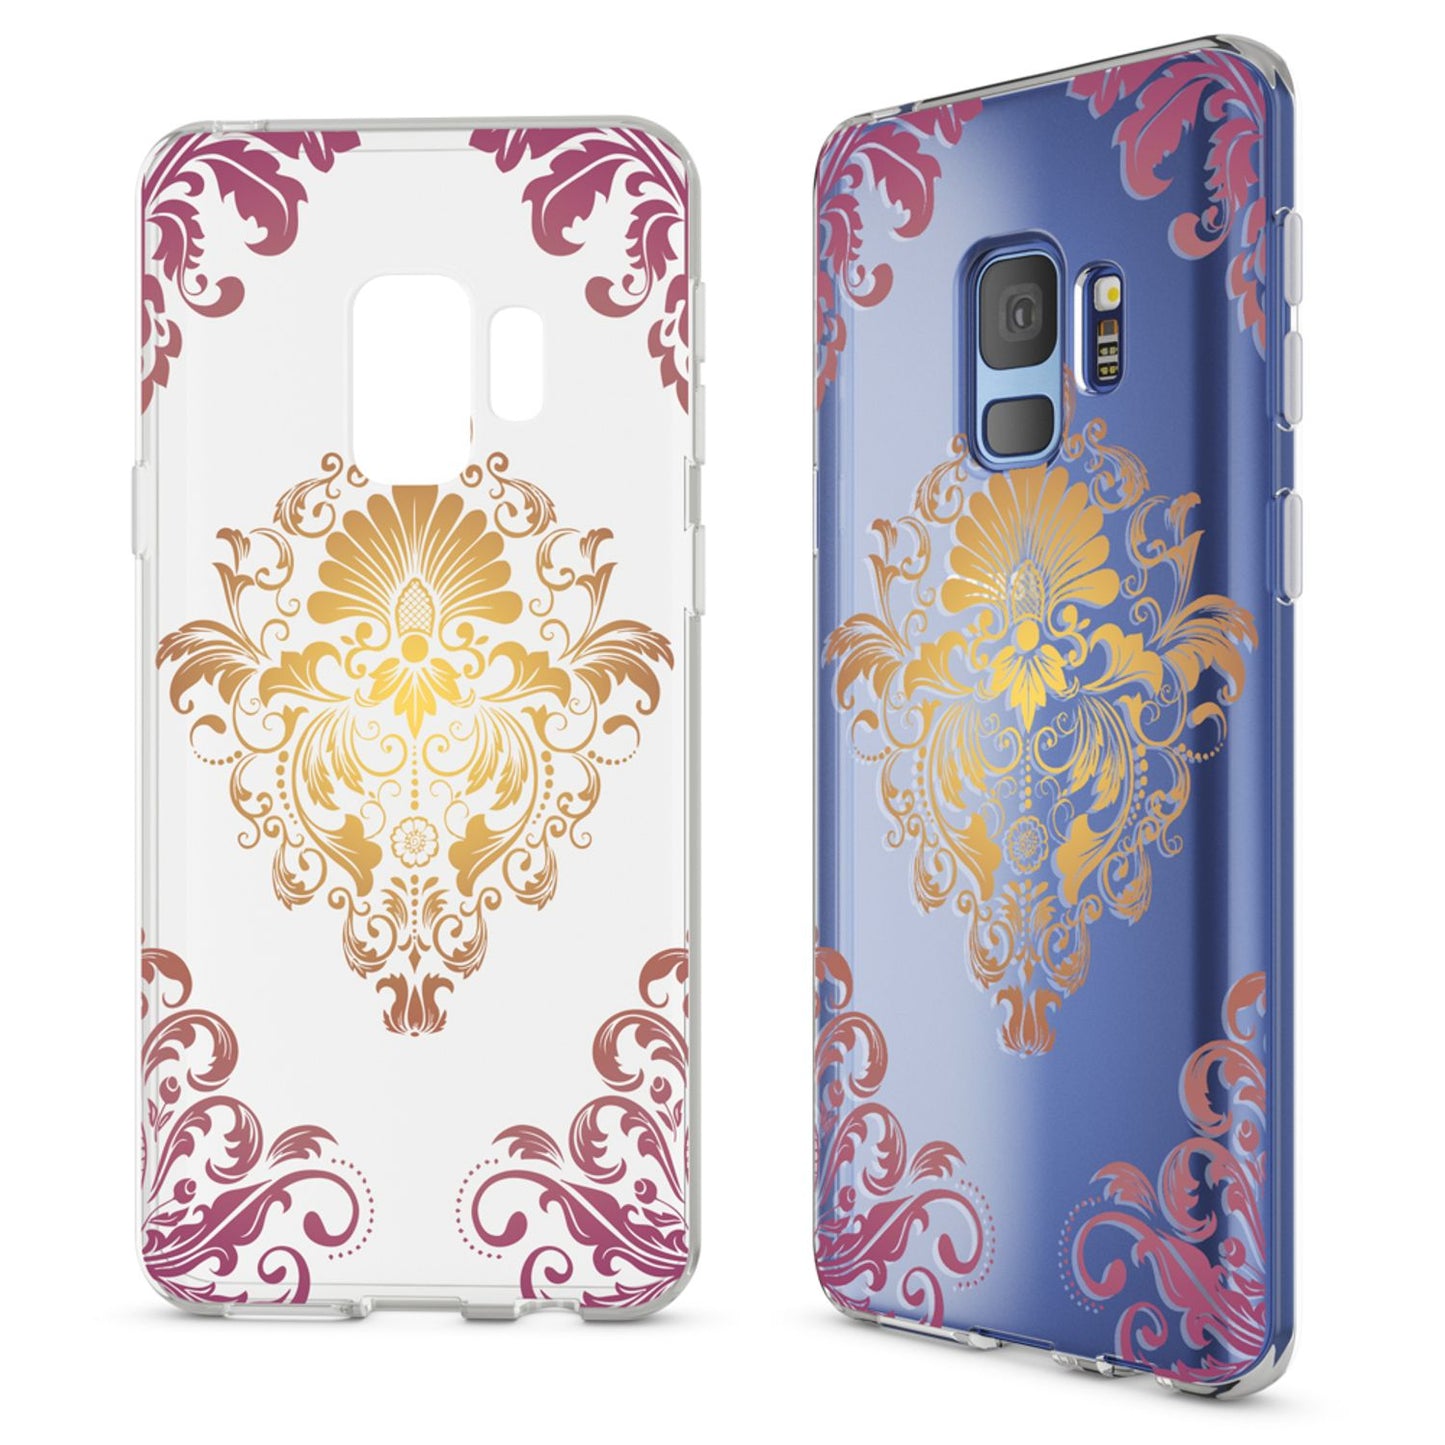 Samsung Galaxy S9 Handy Hülle von NALIA, Silikon Crystal Case Schutz Phone Cover